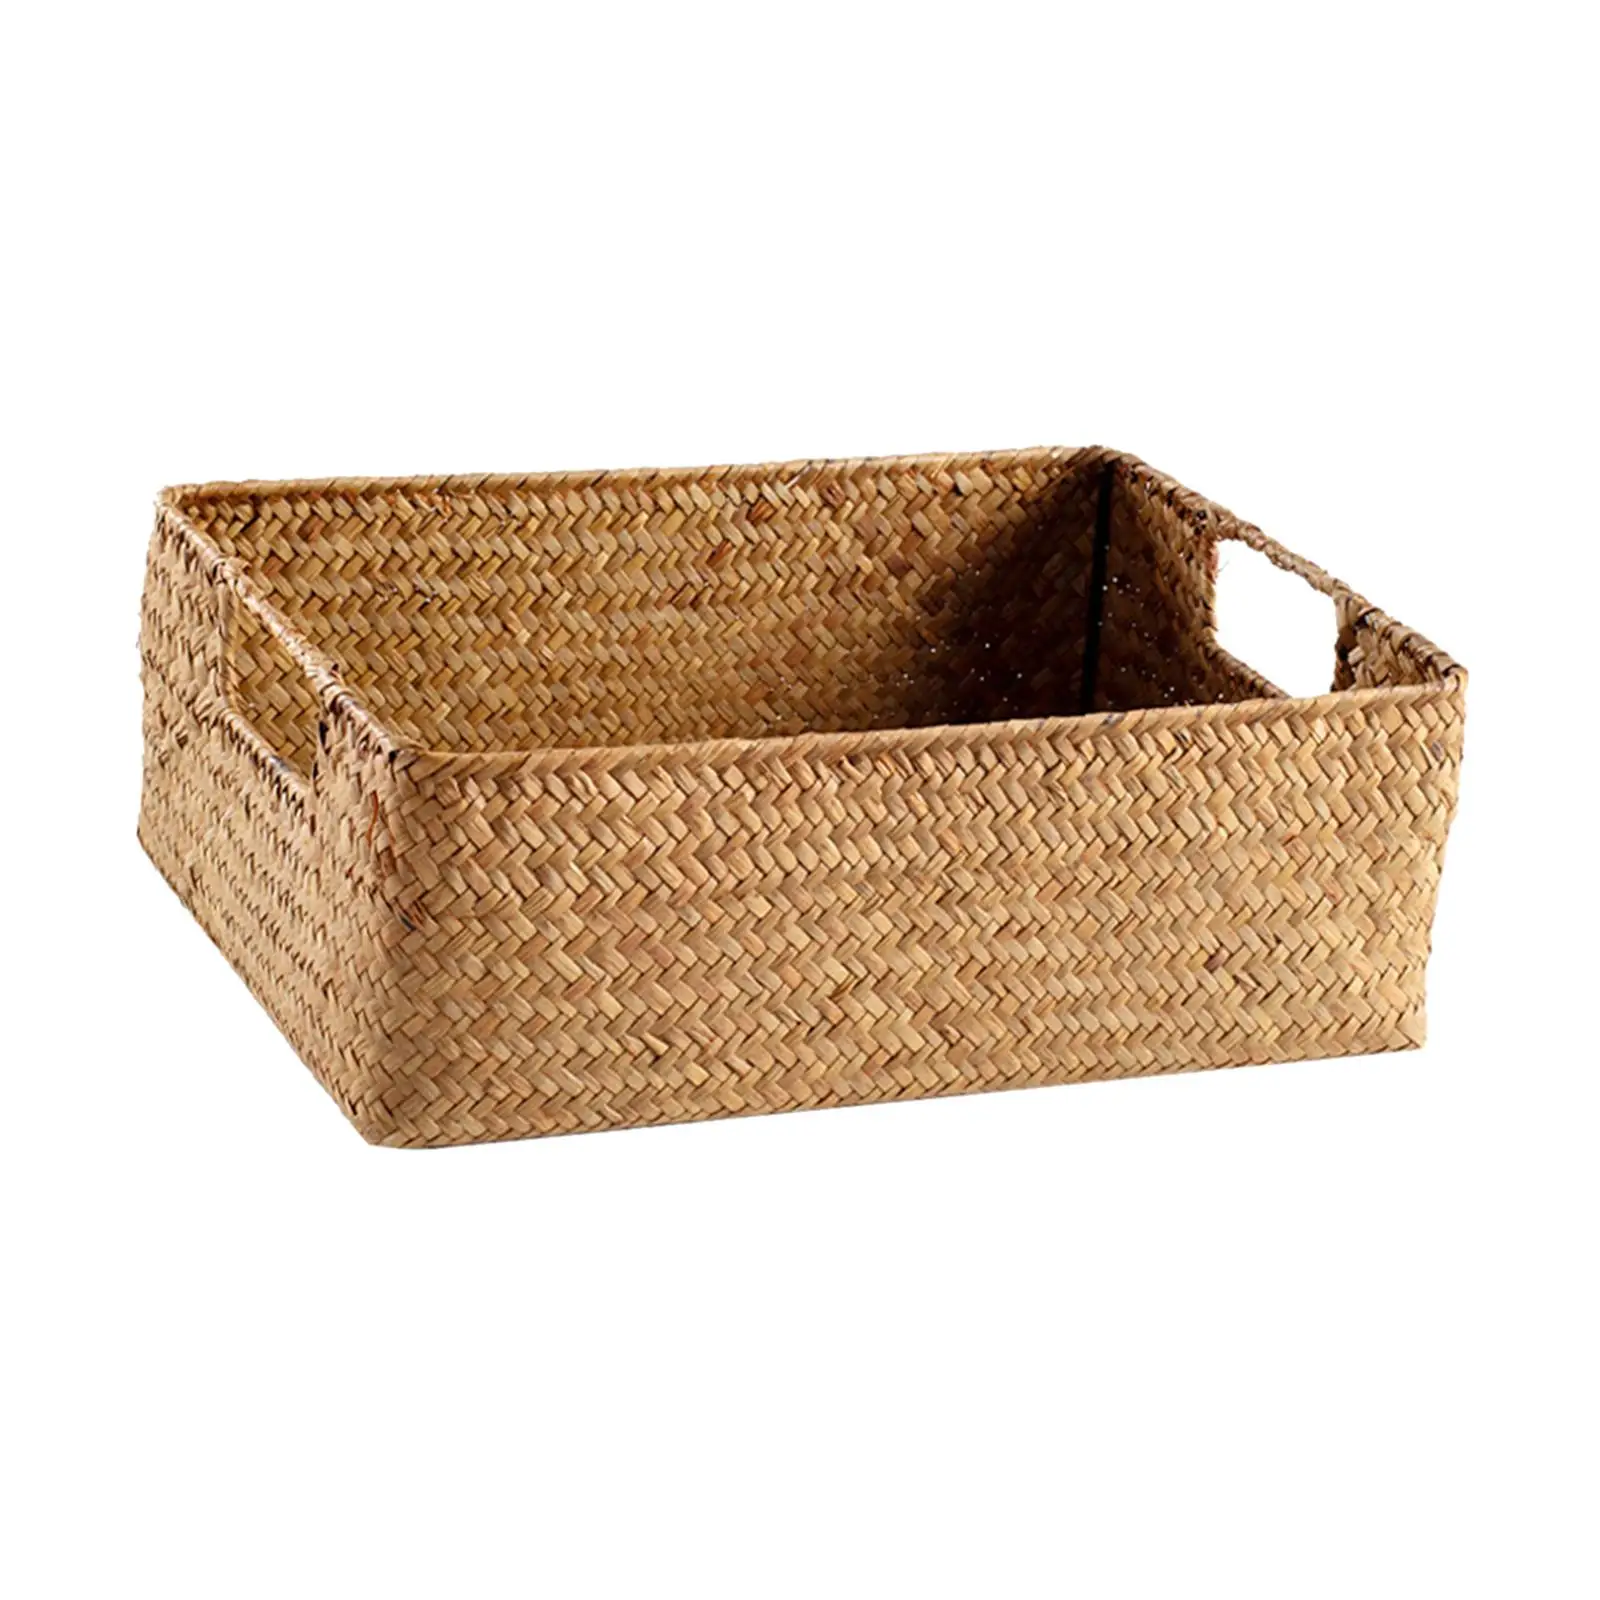 Seagrass Weaving Storage Basket Handwoven Weaving Storage Basket Woven Basket with Handles for Pantry Home Countertop Snacks